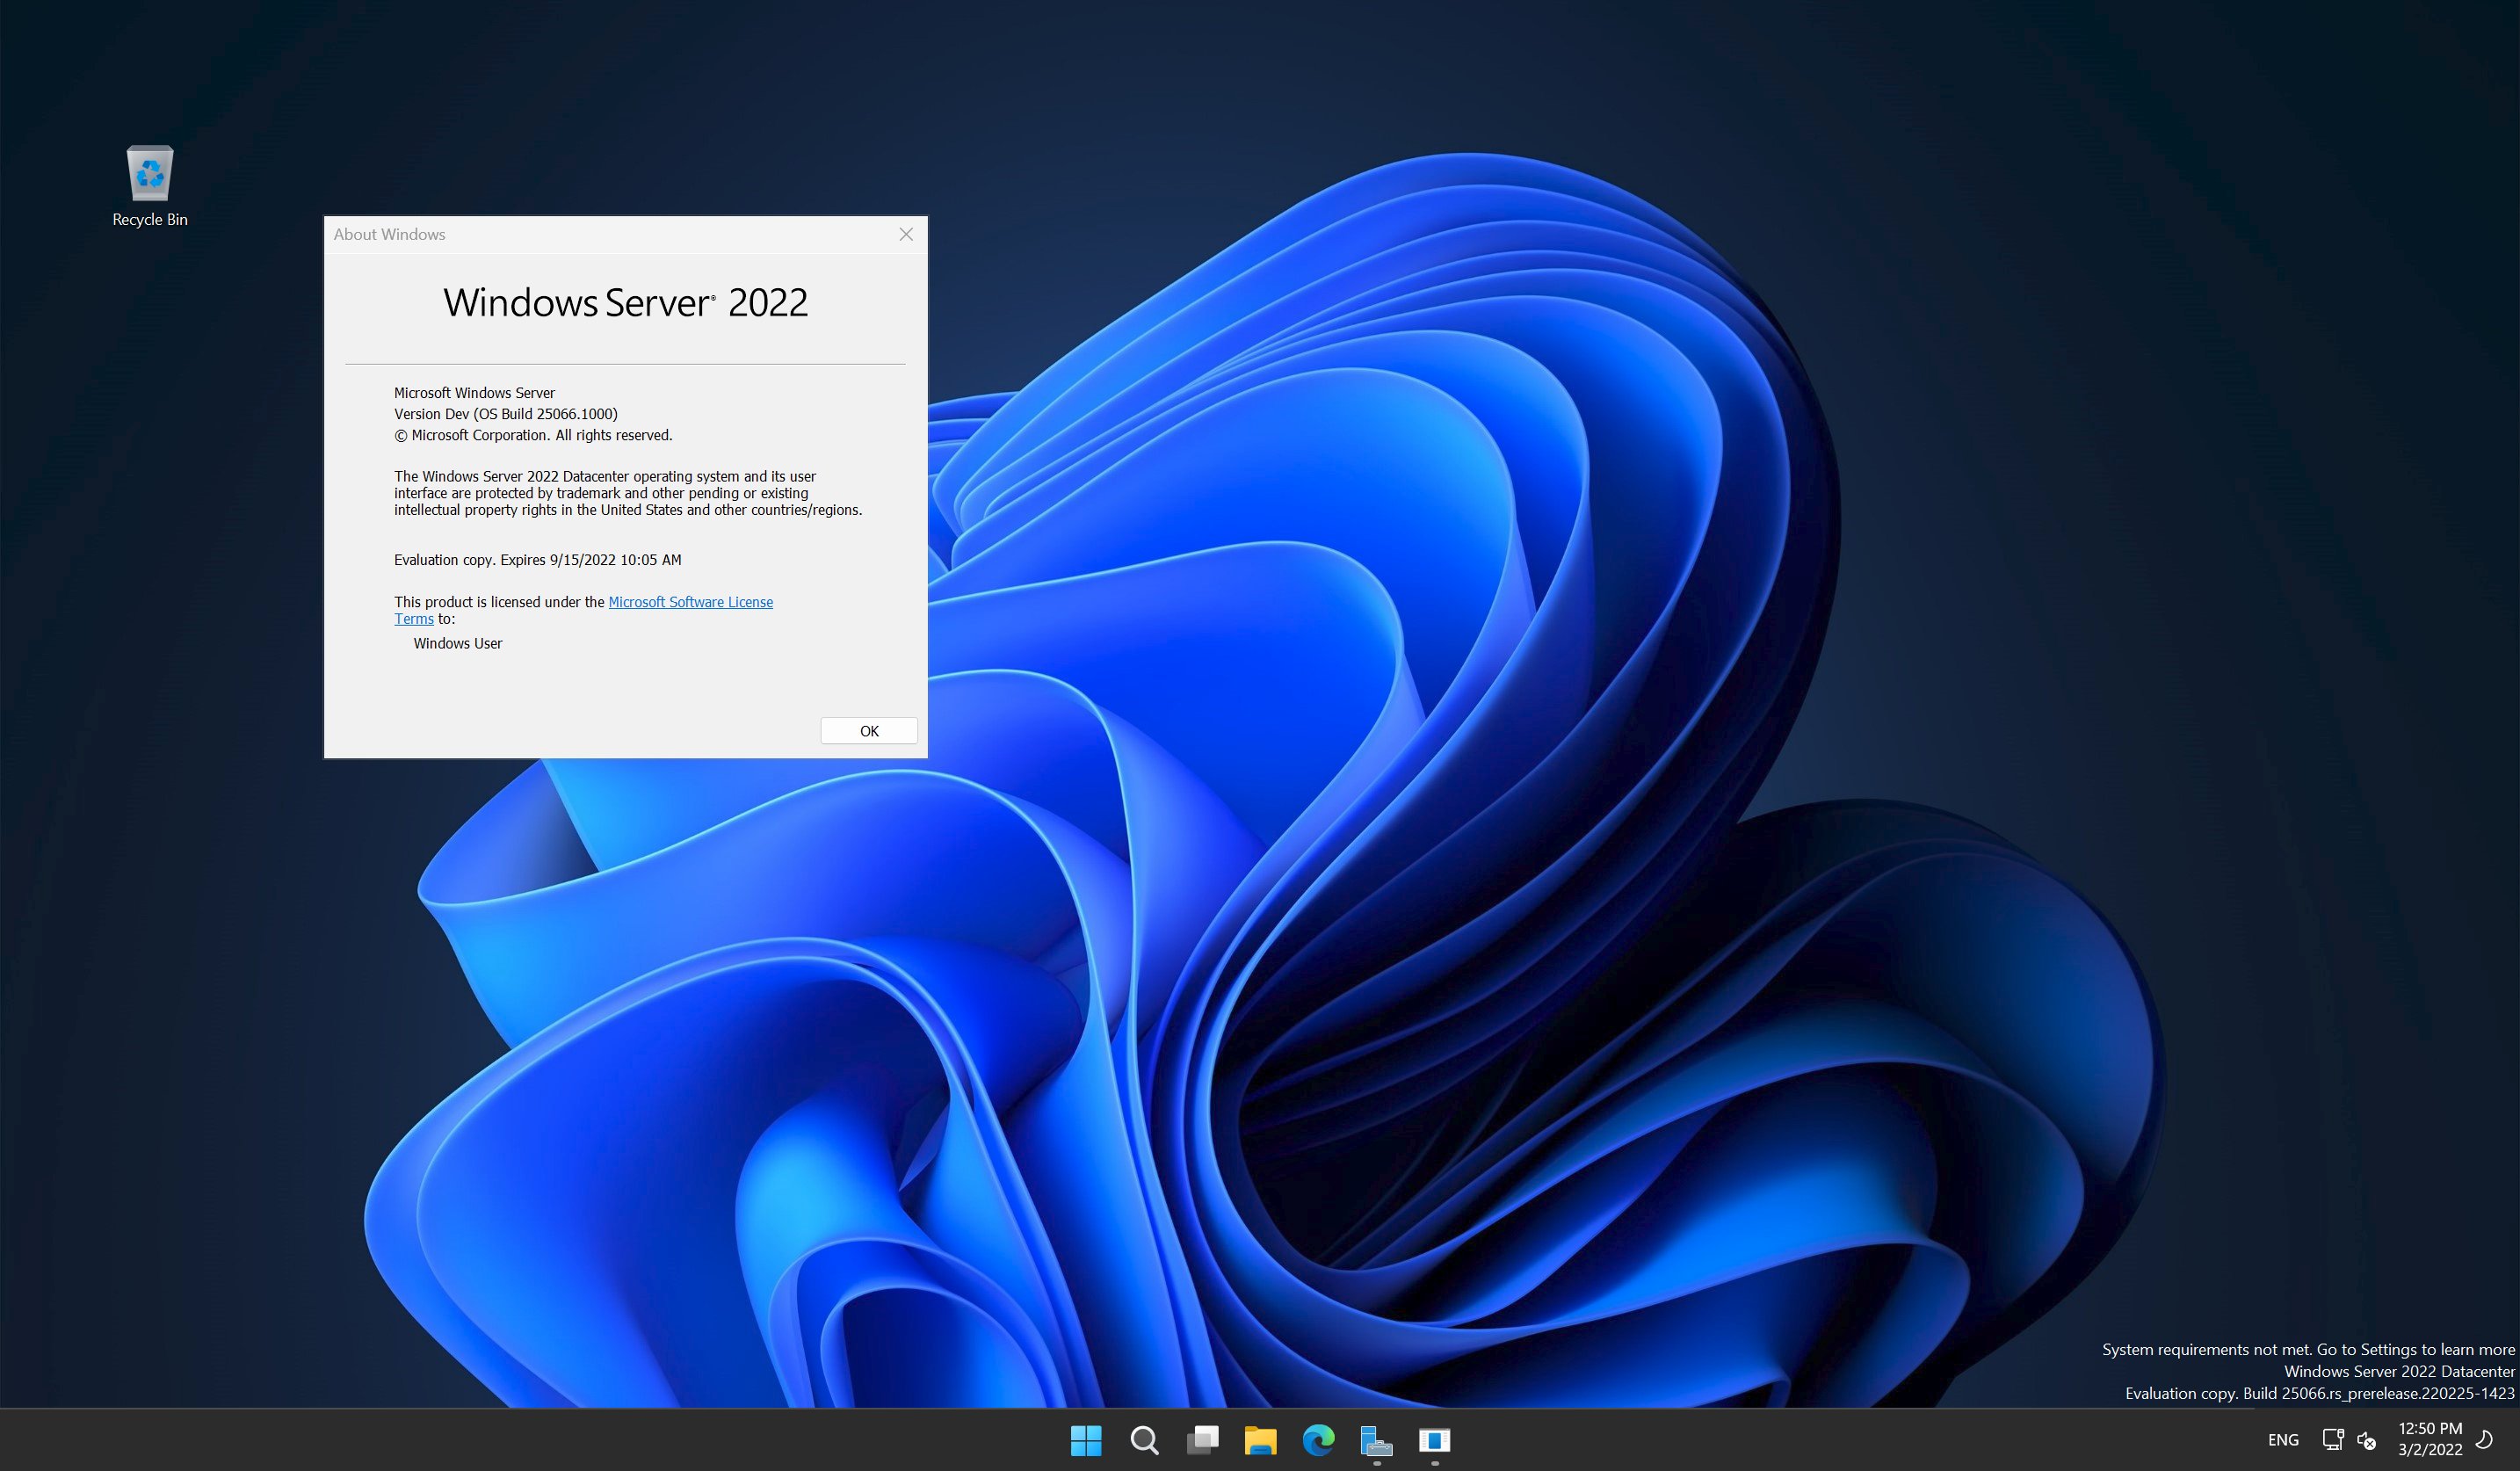 windows 10 insider preview vhdx download